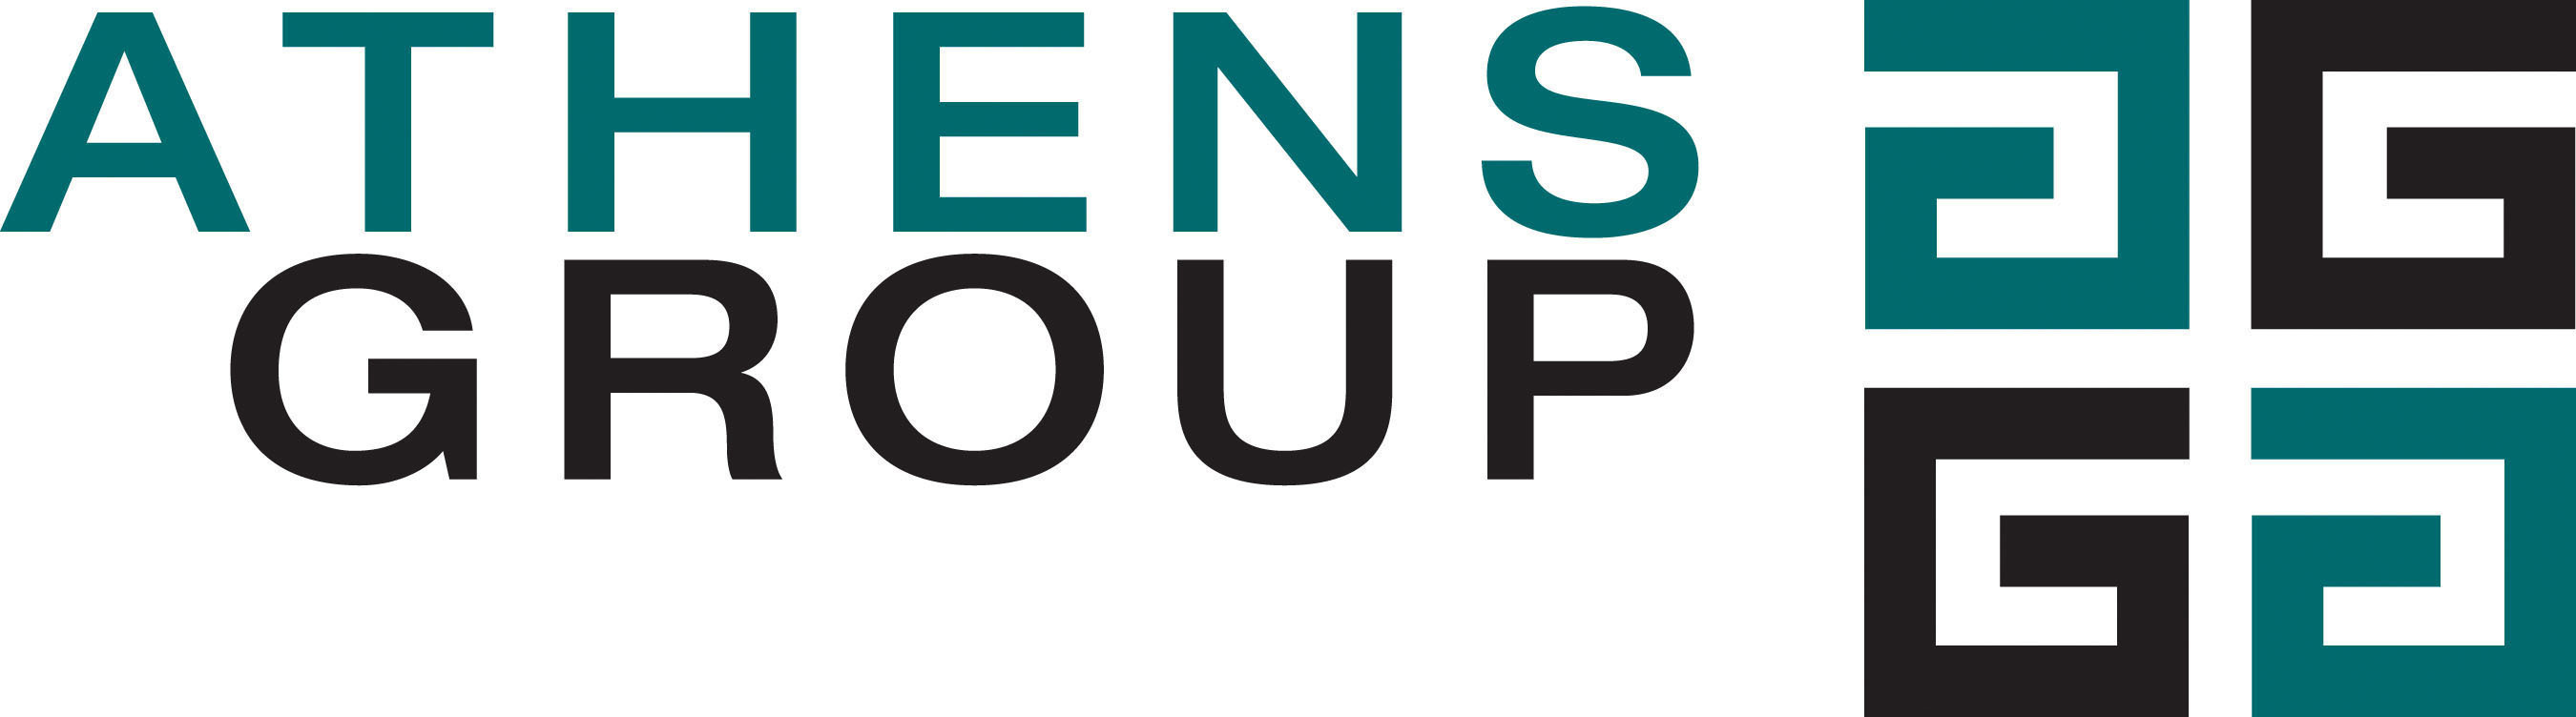 Athens Group logo. (PRNewsFoto/Athens Group) (PRNewsFoto/ATHENS GROUP)